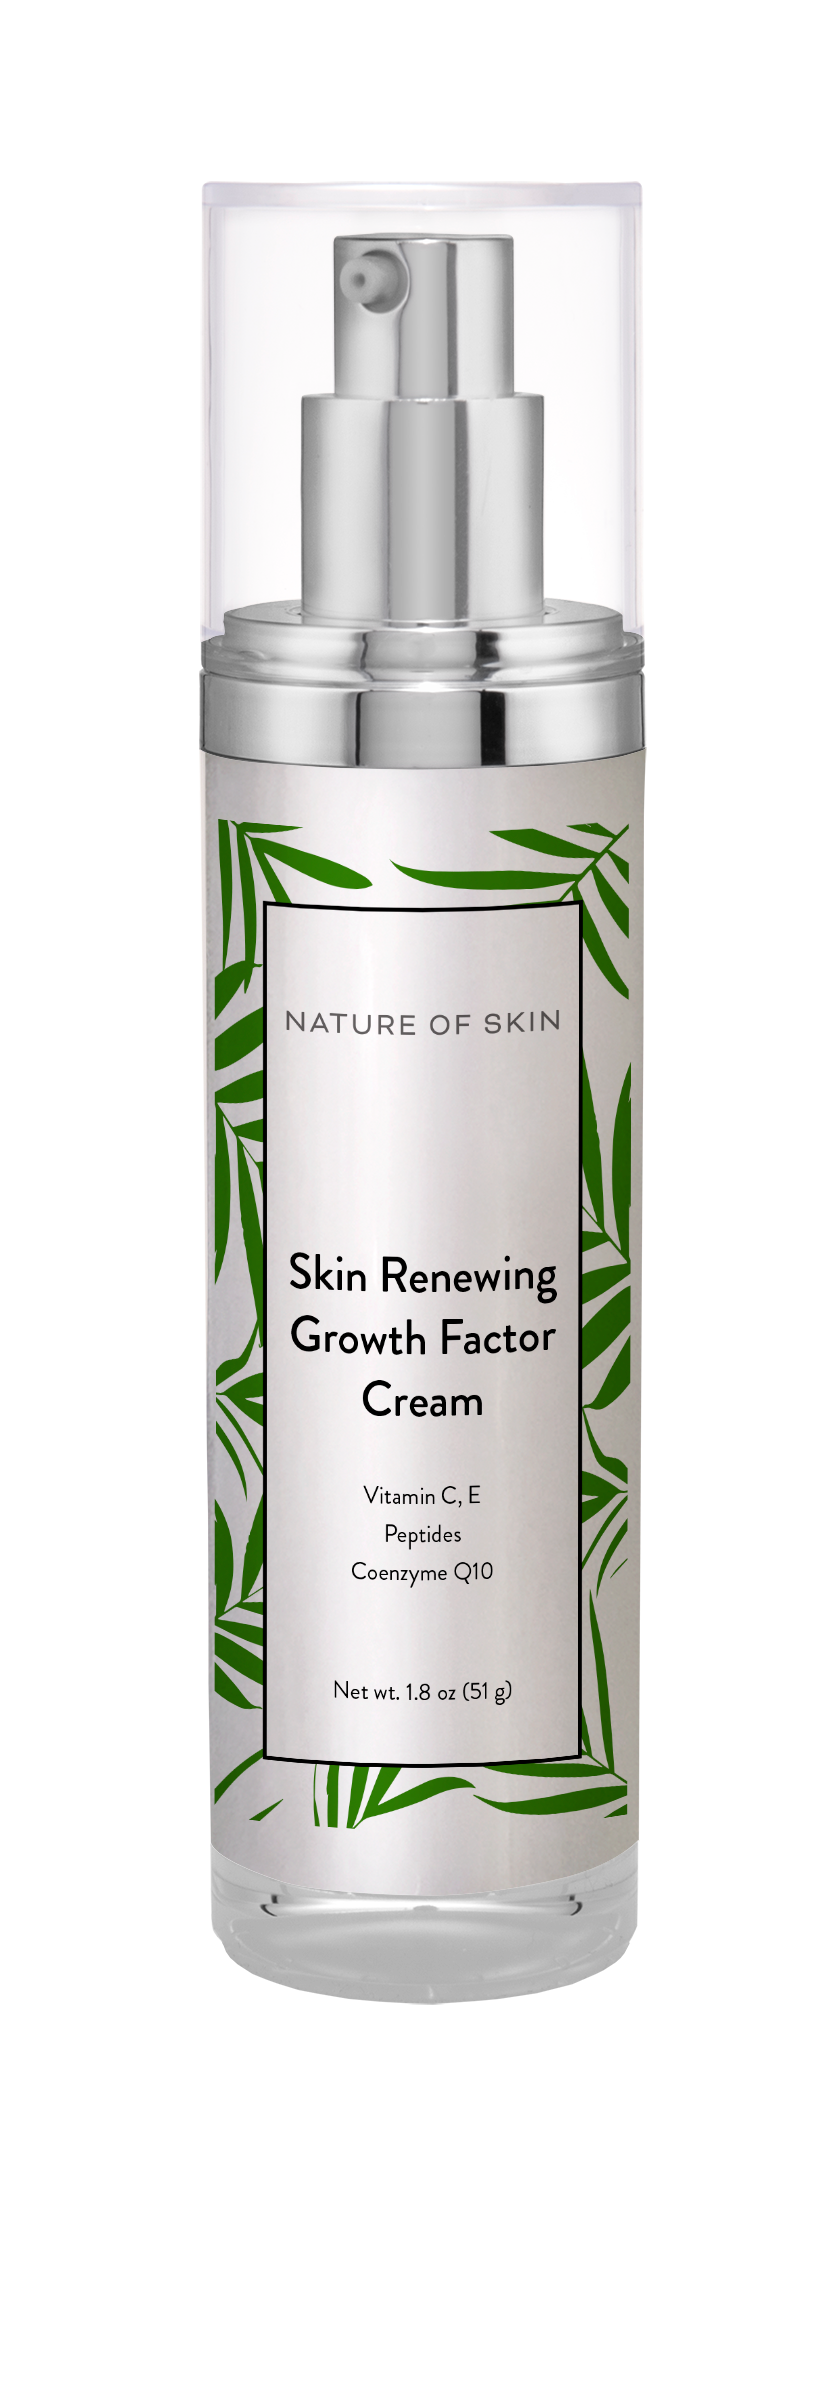 Skin Renewing Growth Factor Cream